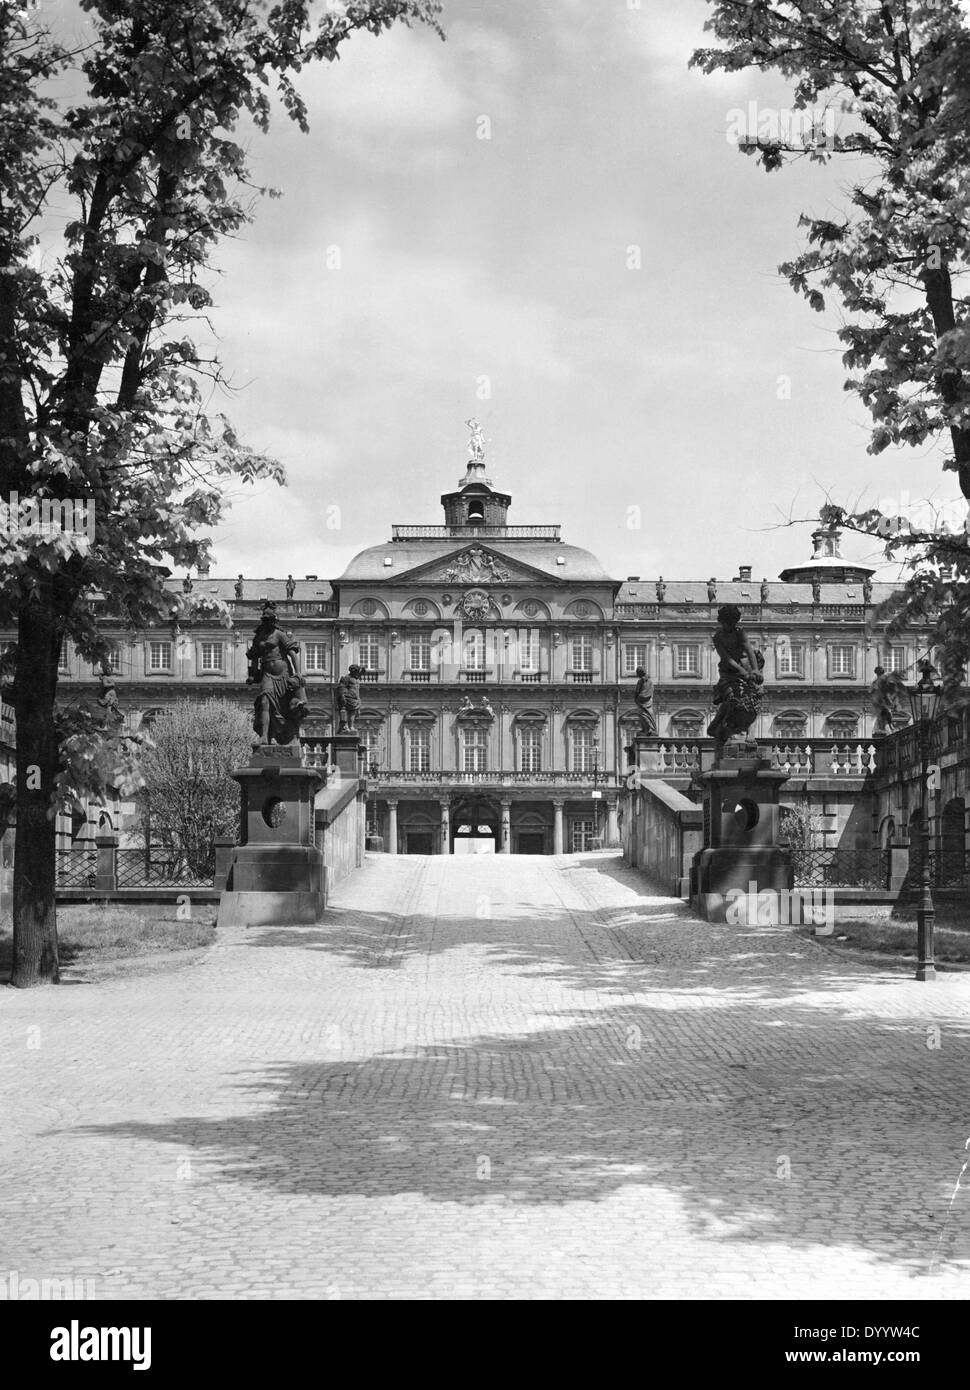 El Castillo Barroco de Rastatt, 1930 Foto de stock